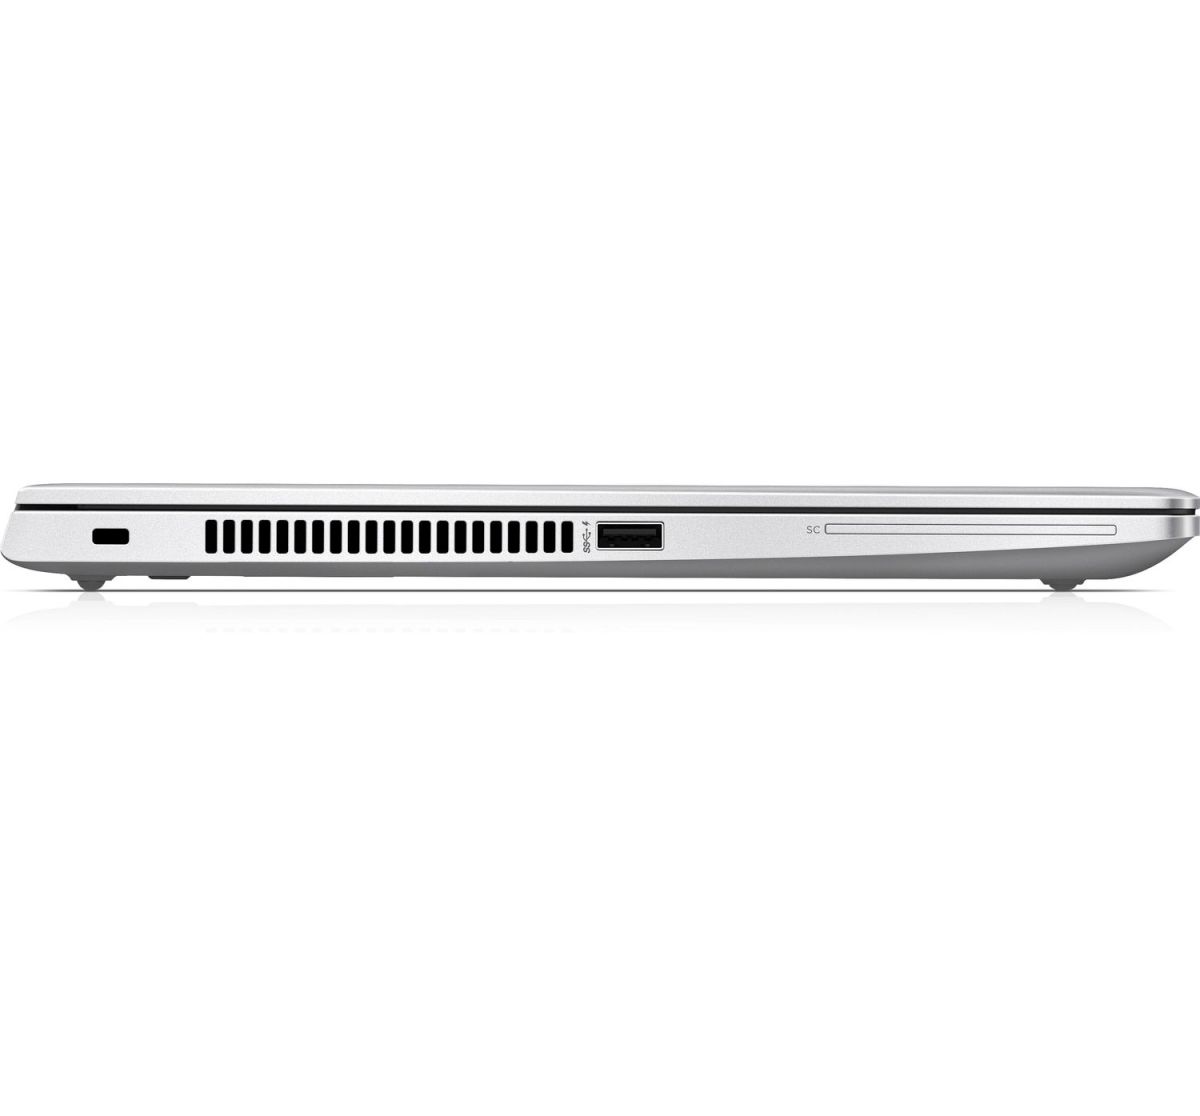 HP EliteBook 830 G5 - 3PZ05UT laptop specifications